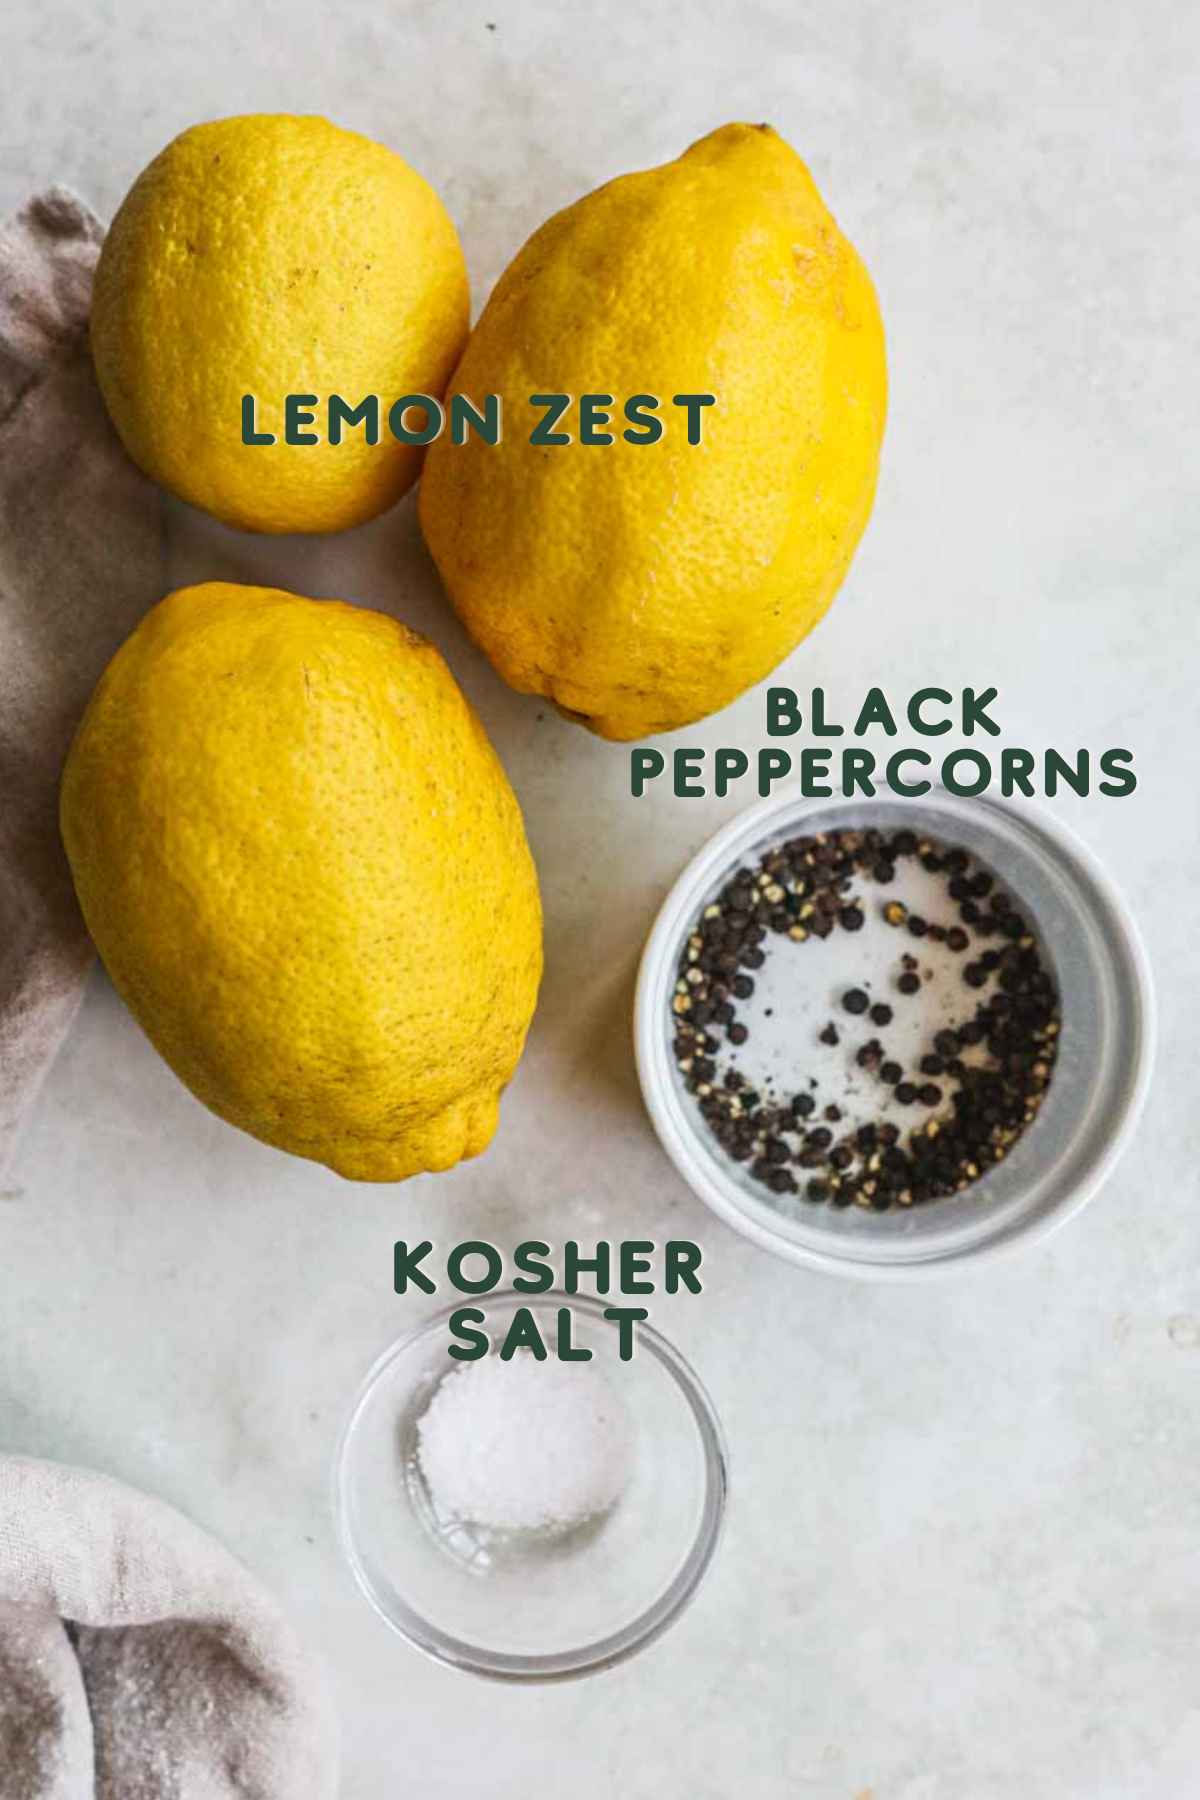 Ingredients to make lemon pepper seasoning, including lemon zest, black peppercorns, and kosher or sea salt.